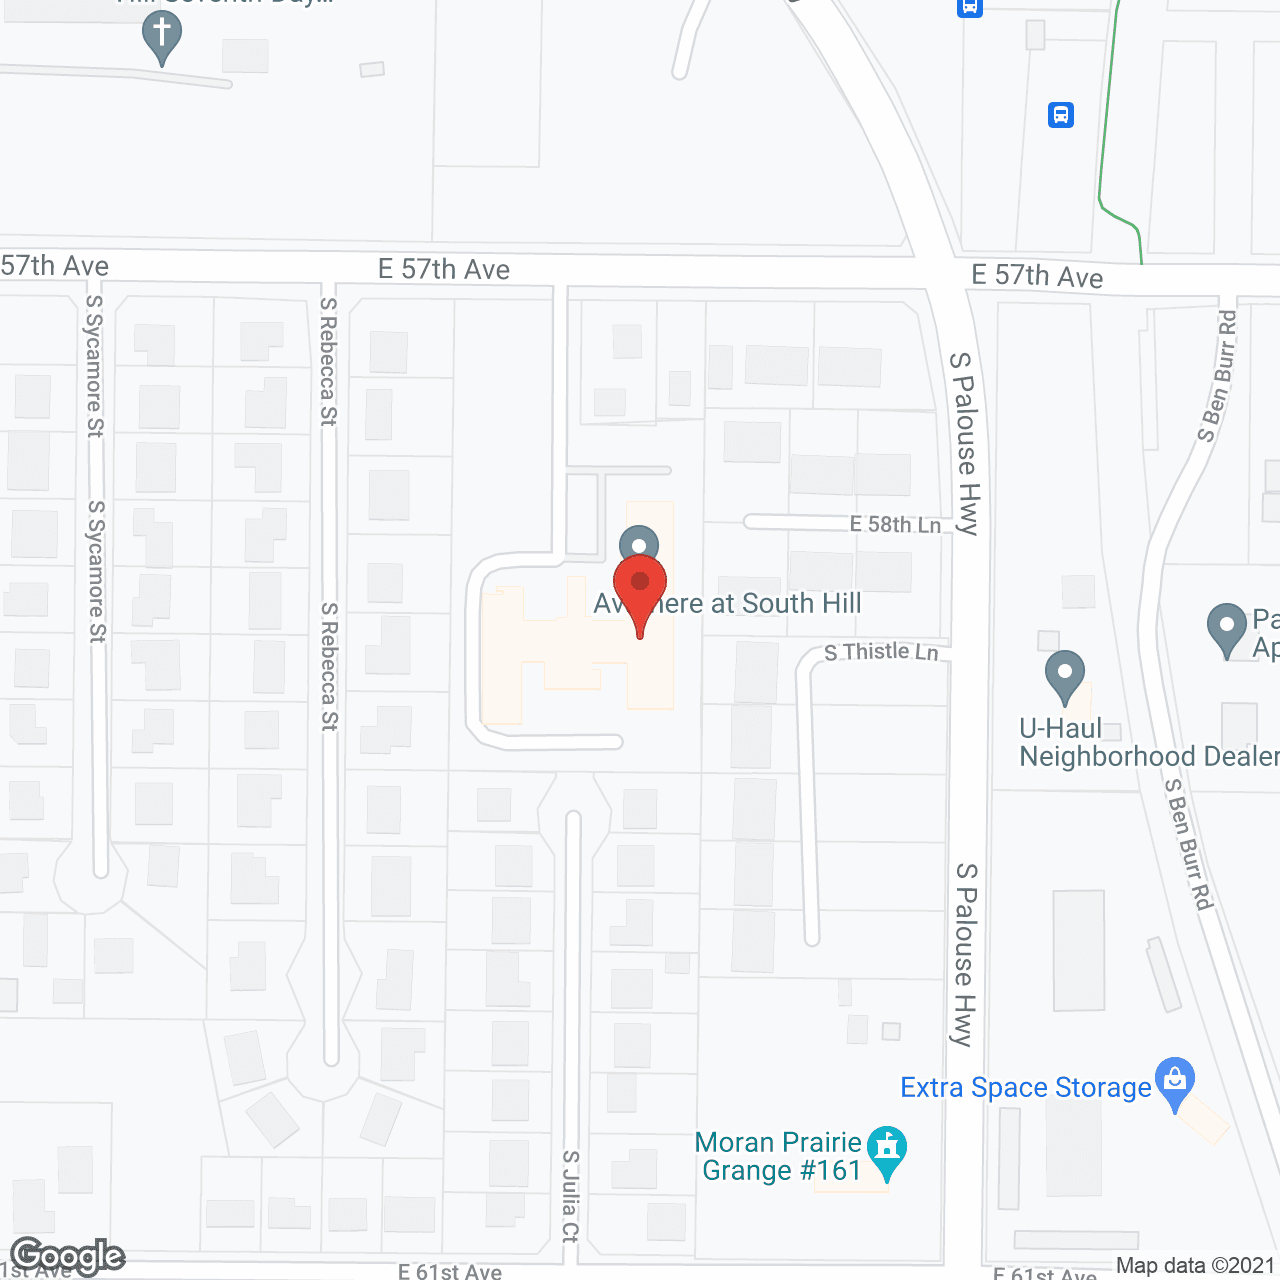 Parkway Village in google map